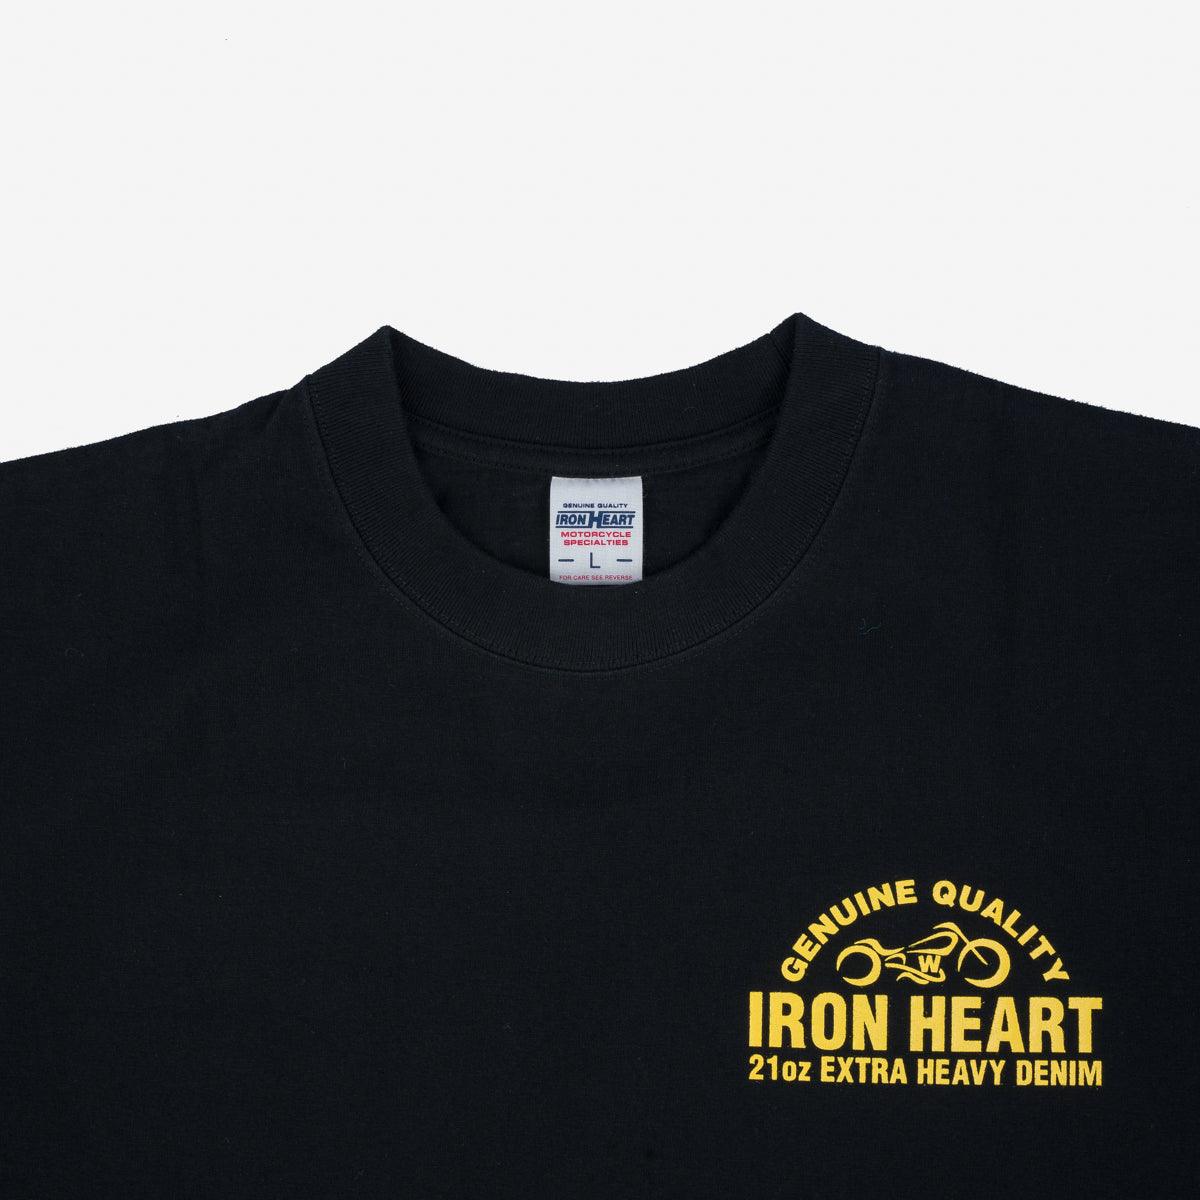 IHPT-2304-BLK - 7.5oz Printed Loopwheel Crew Neck T-Shirt - Black